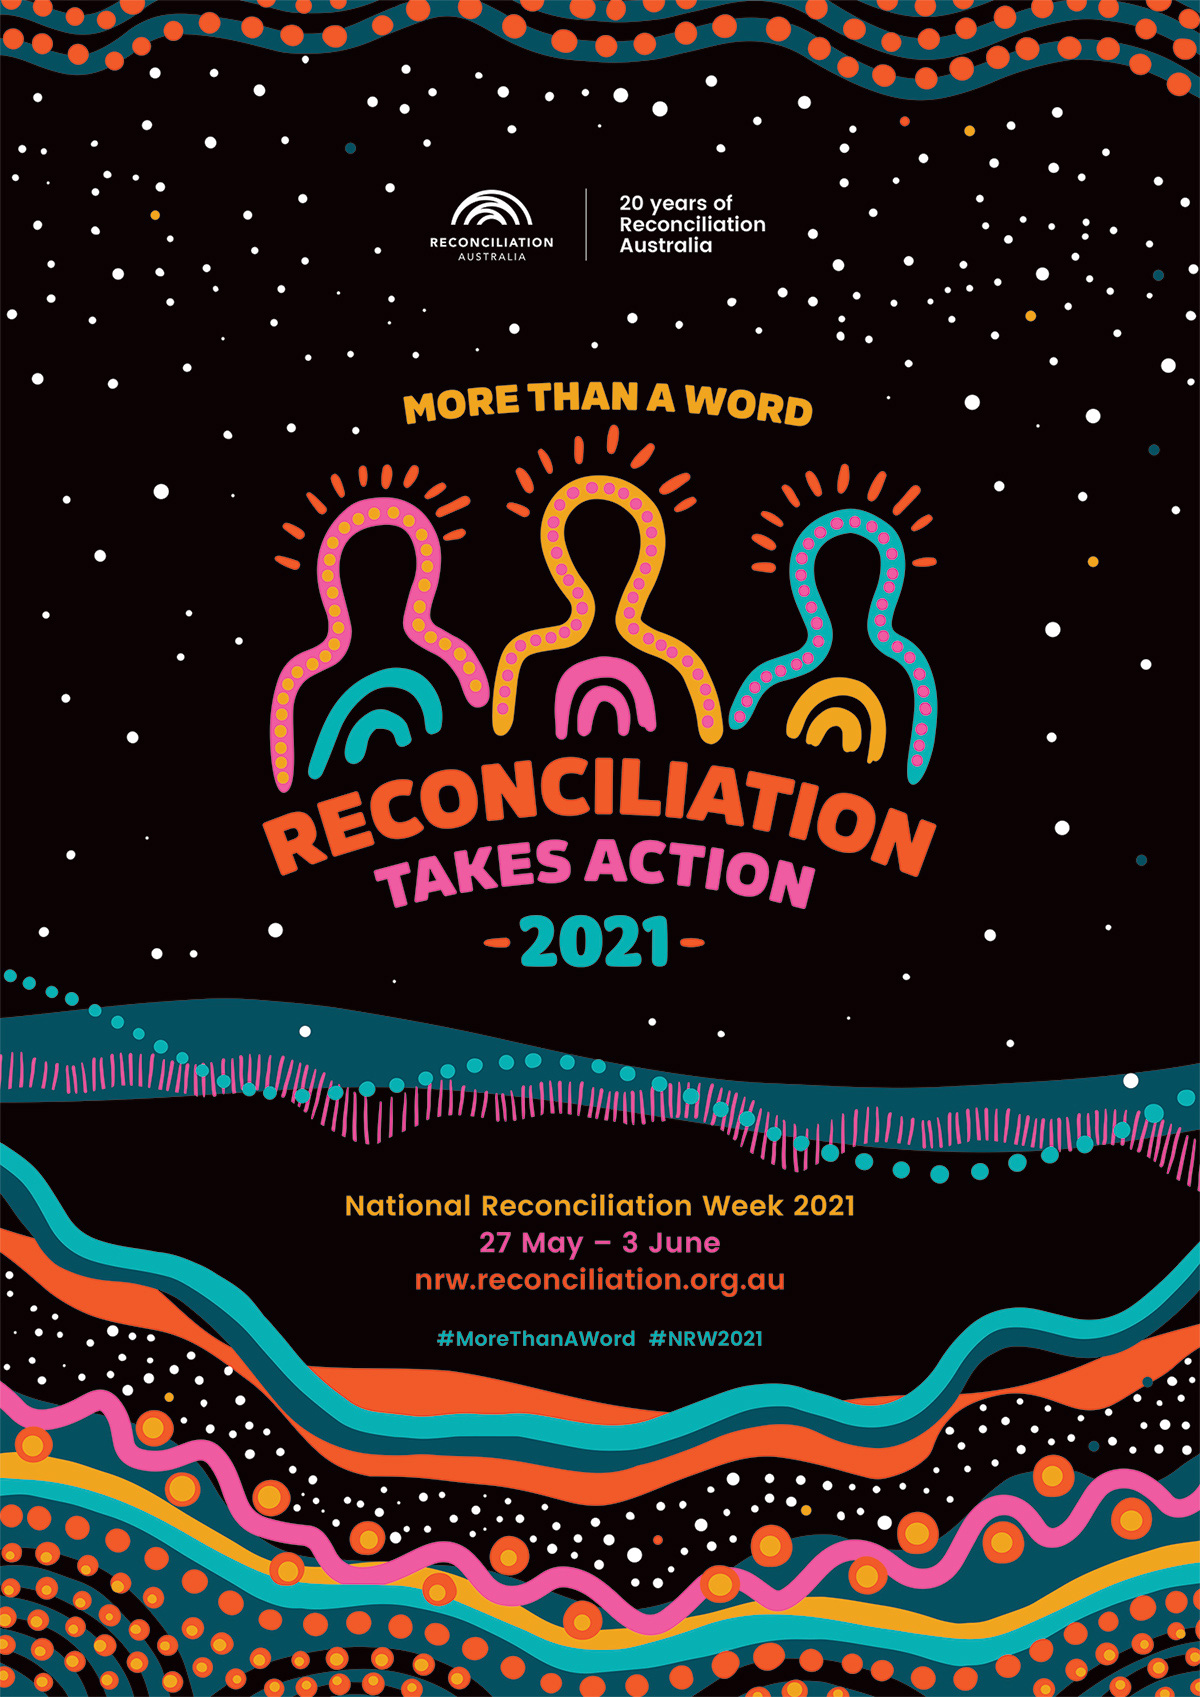 Reconciliation week 2021